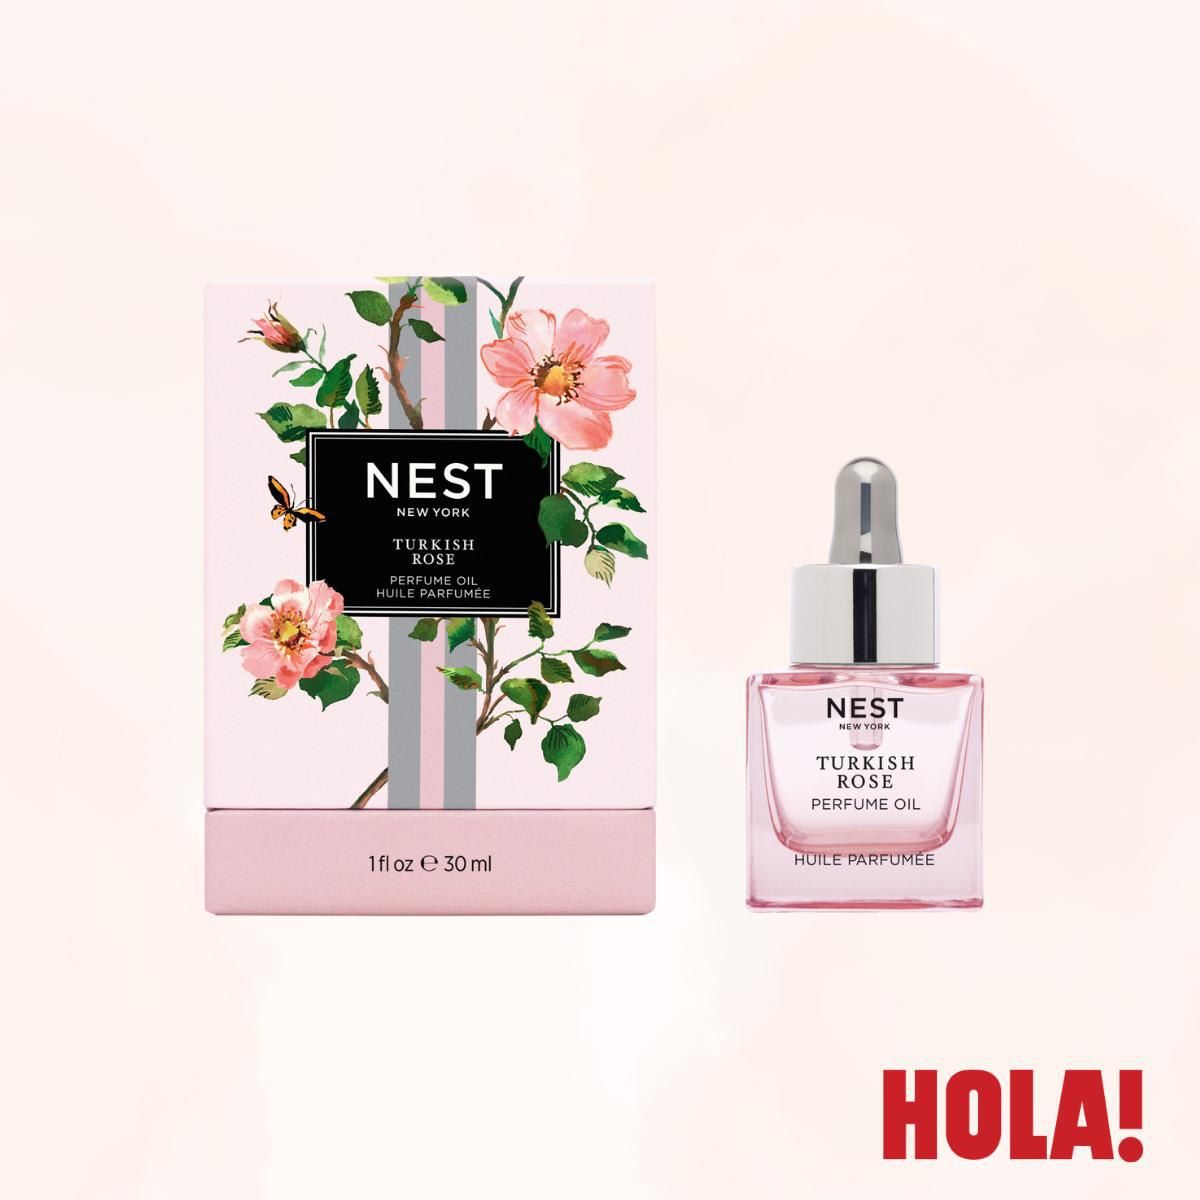 NEST New York's Perfume Oil, Turkish Rose